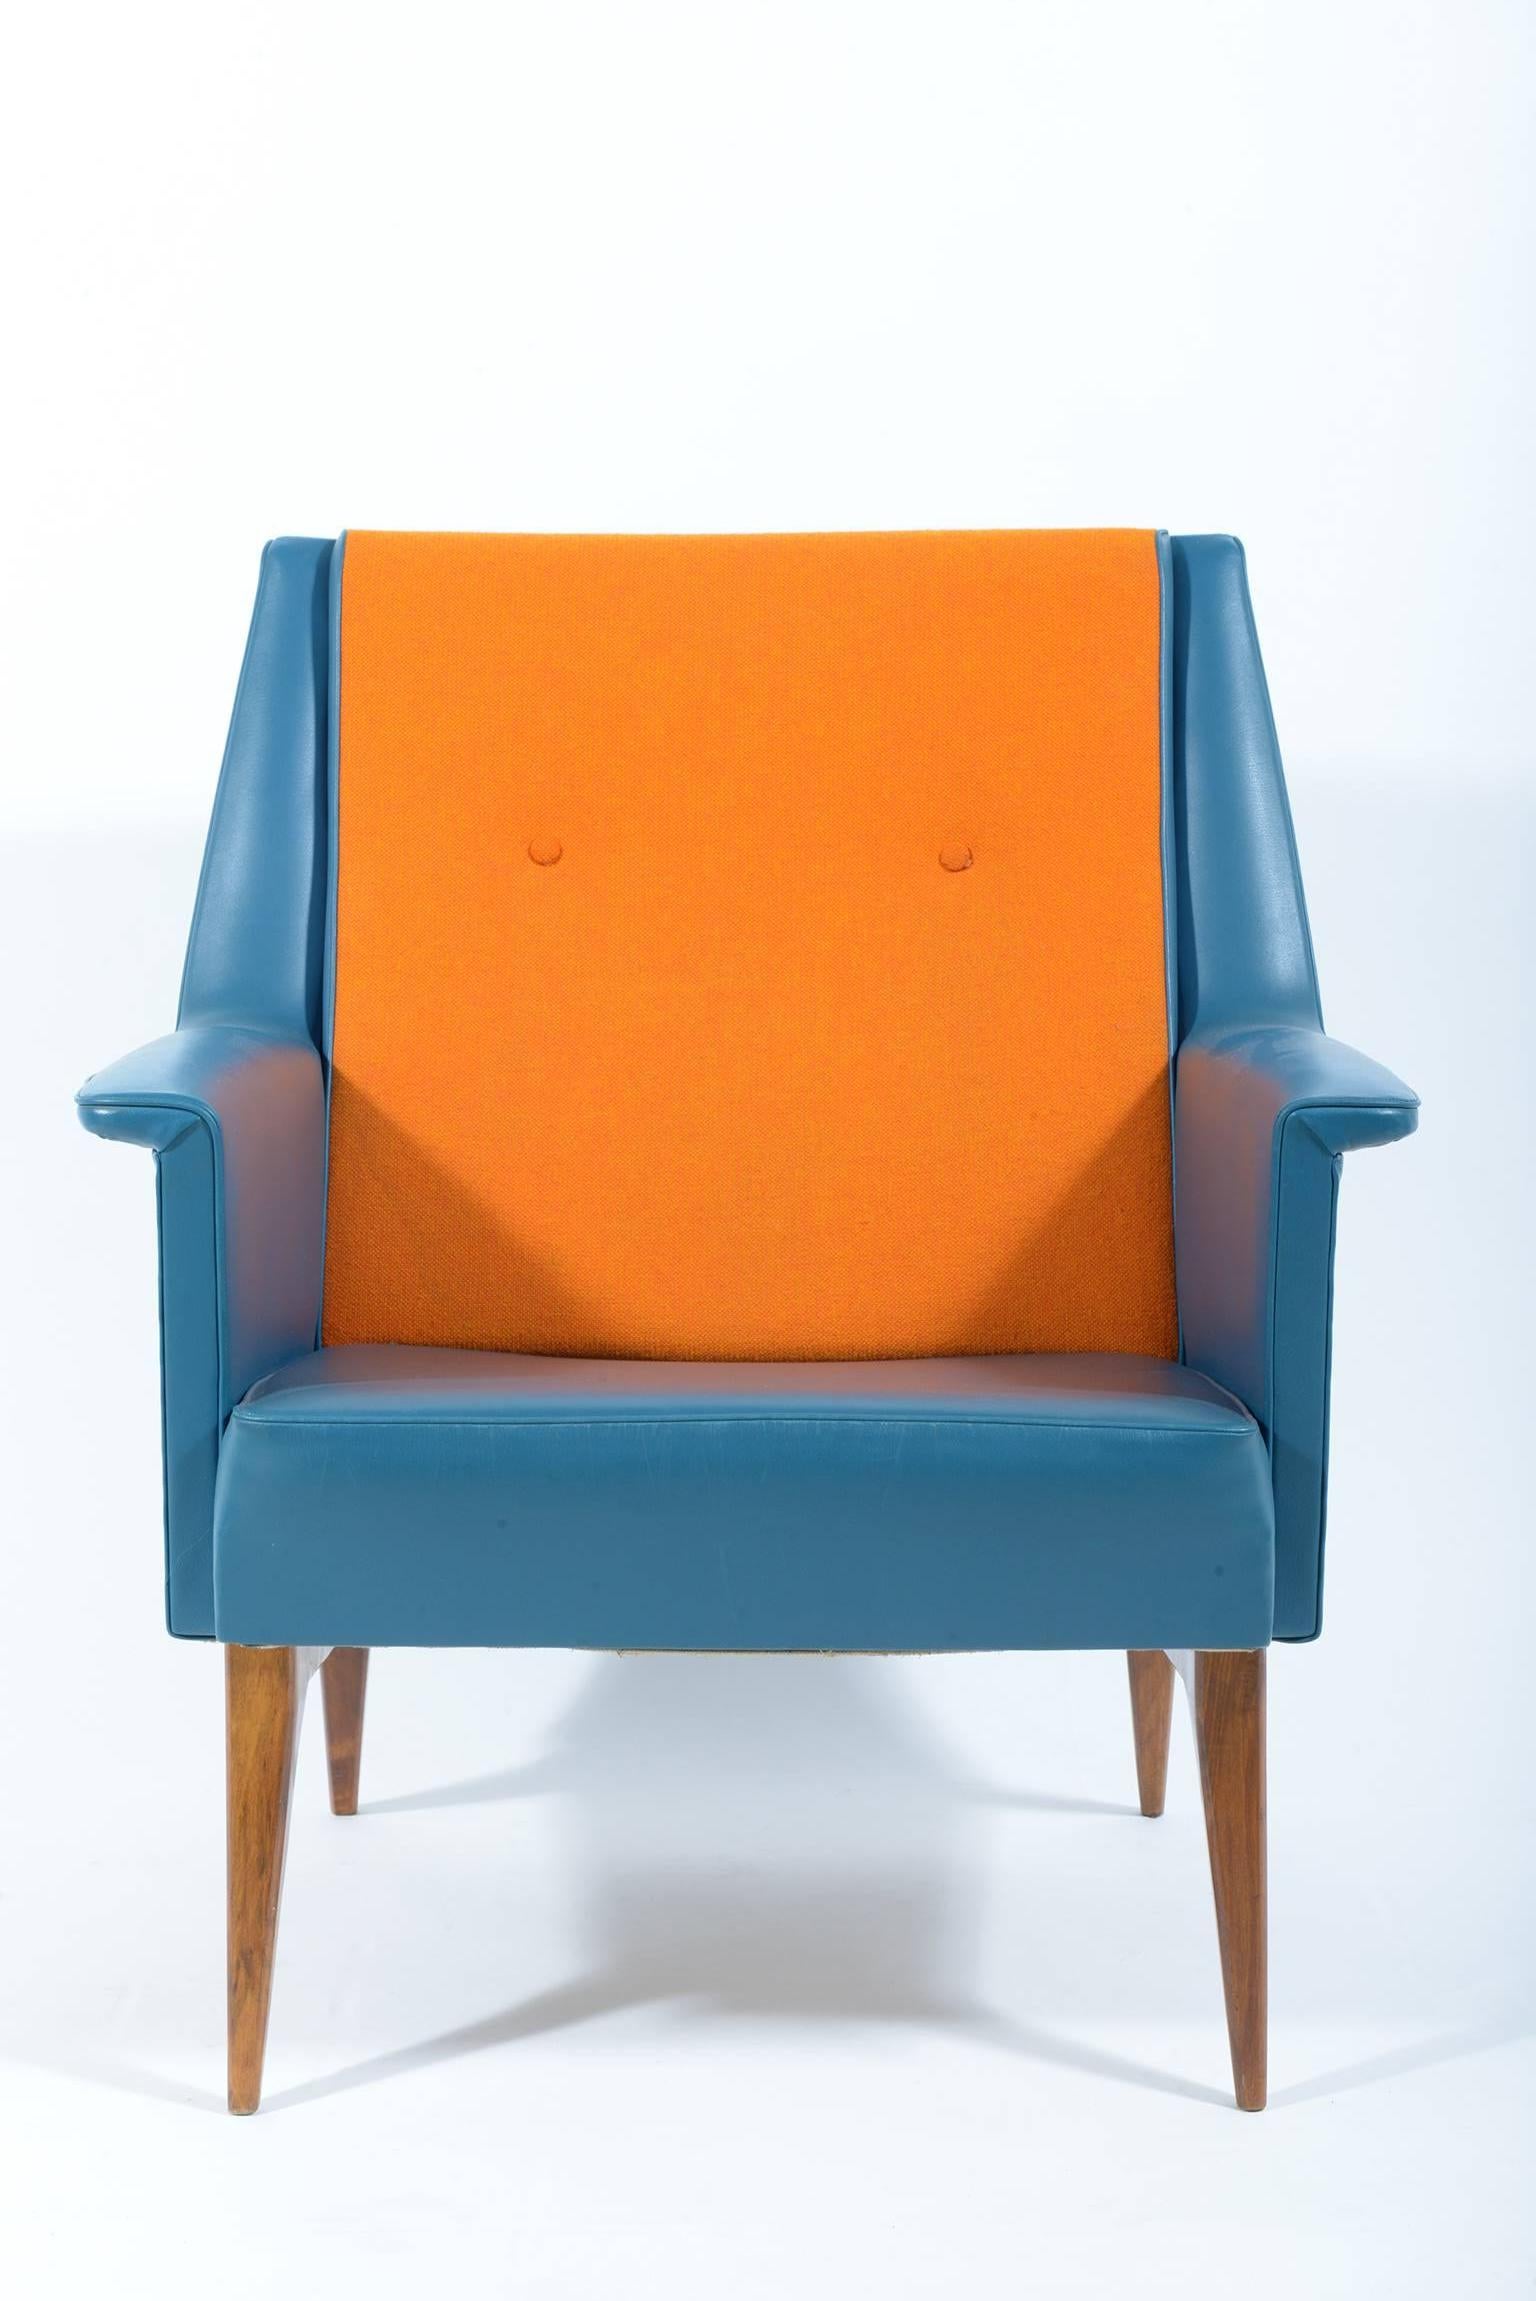 Italian Castelli Signed Midcentury Pair of Armchairs Original Orange-Bleu Upholstery For Sale